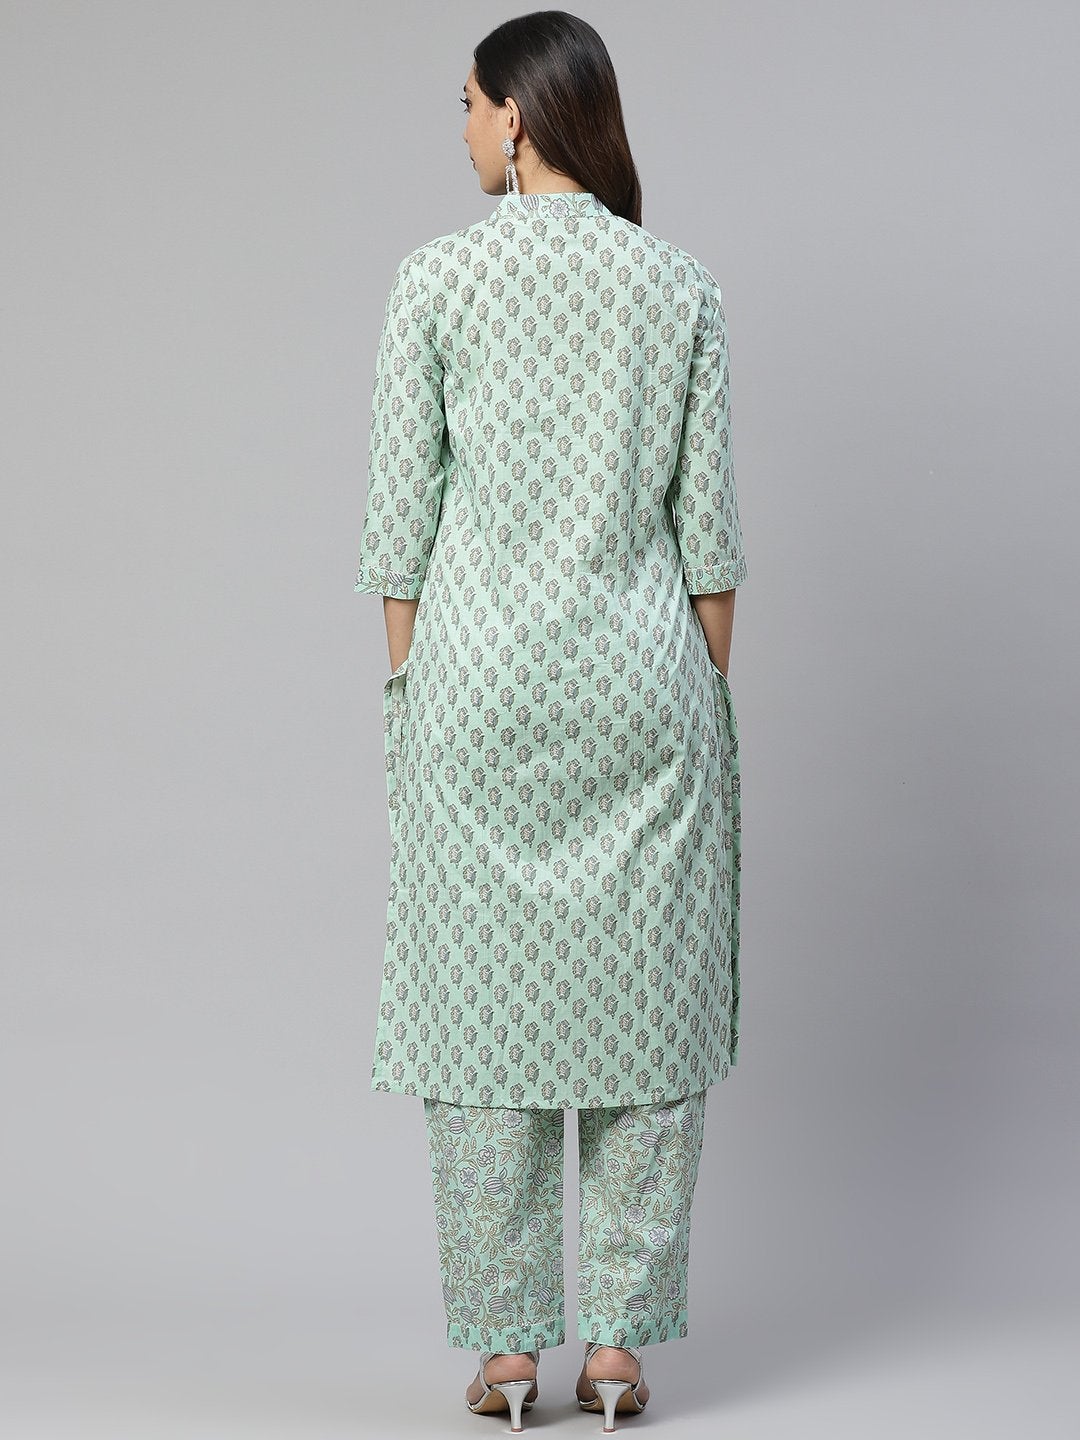 Women's Sea Green Cotton Printed Kurti Pant Set - Divena